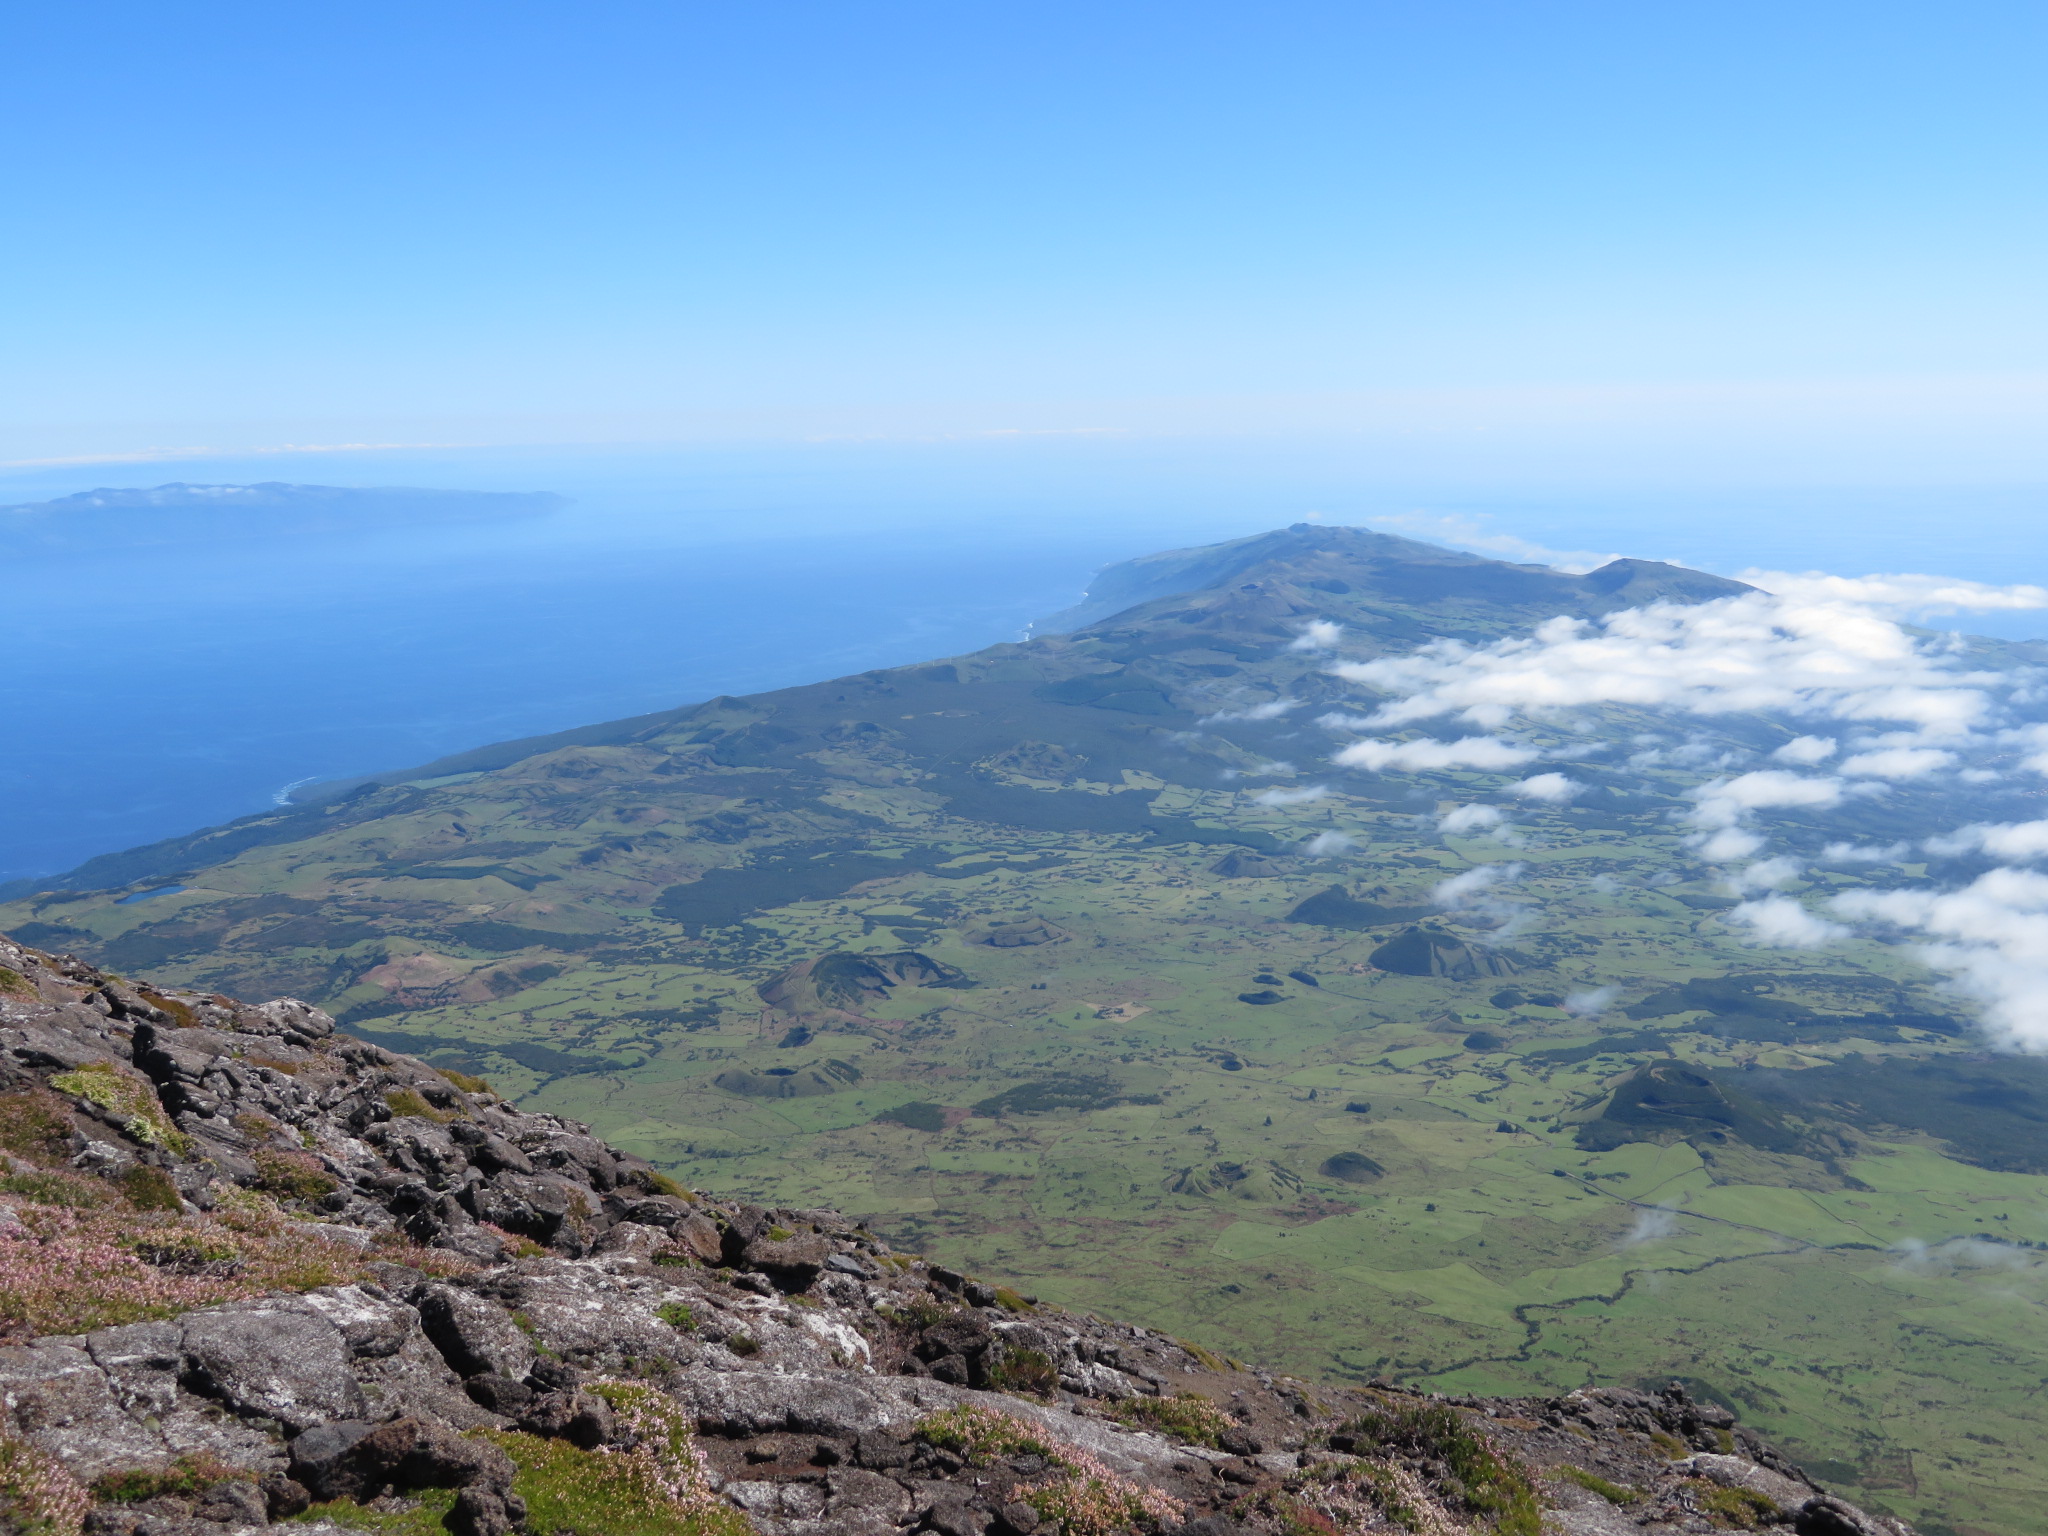 Pico Volcano
East along Pico island from crater rim - © William Mackesy